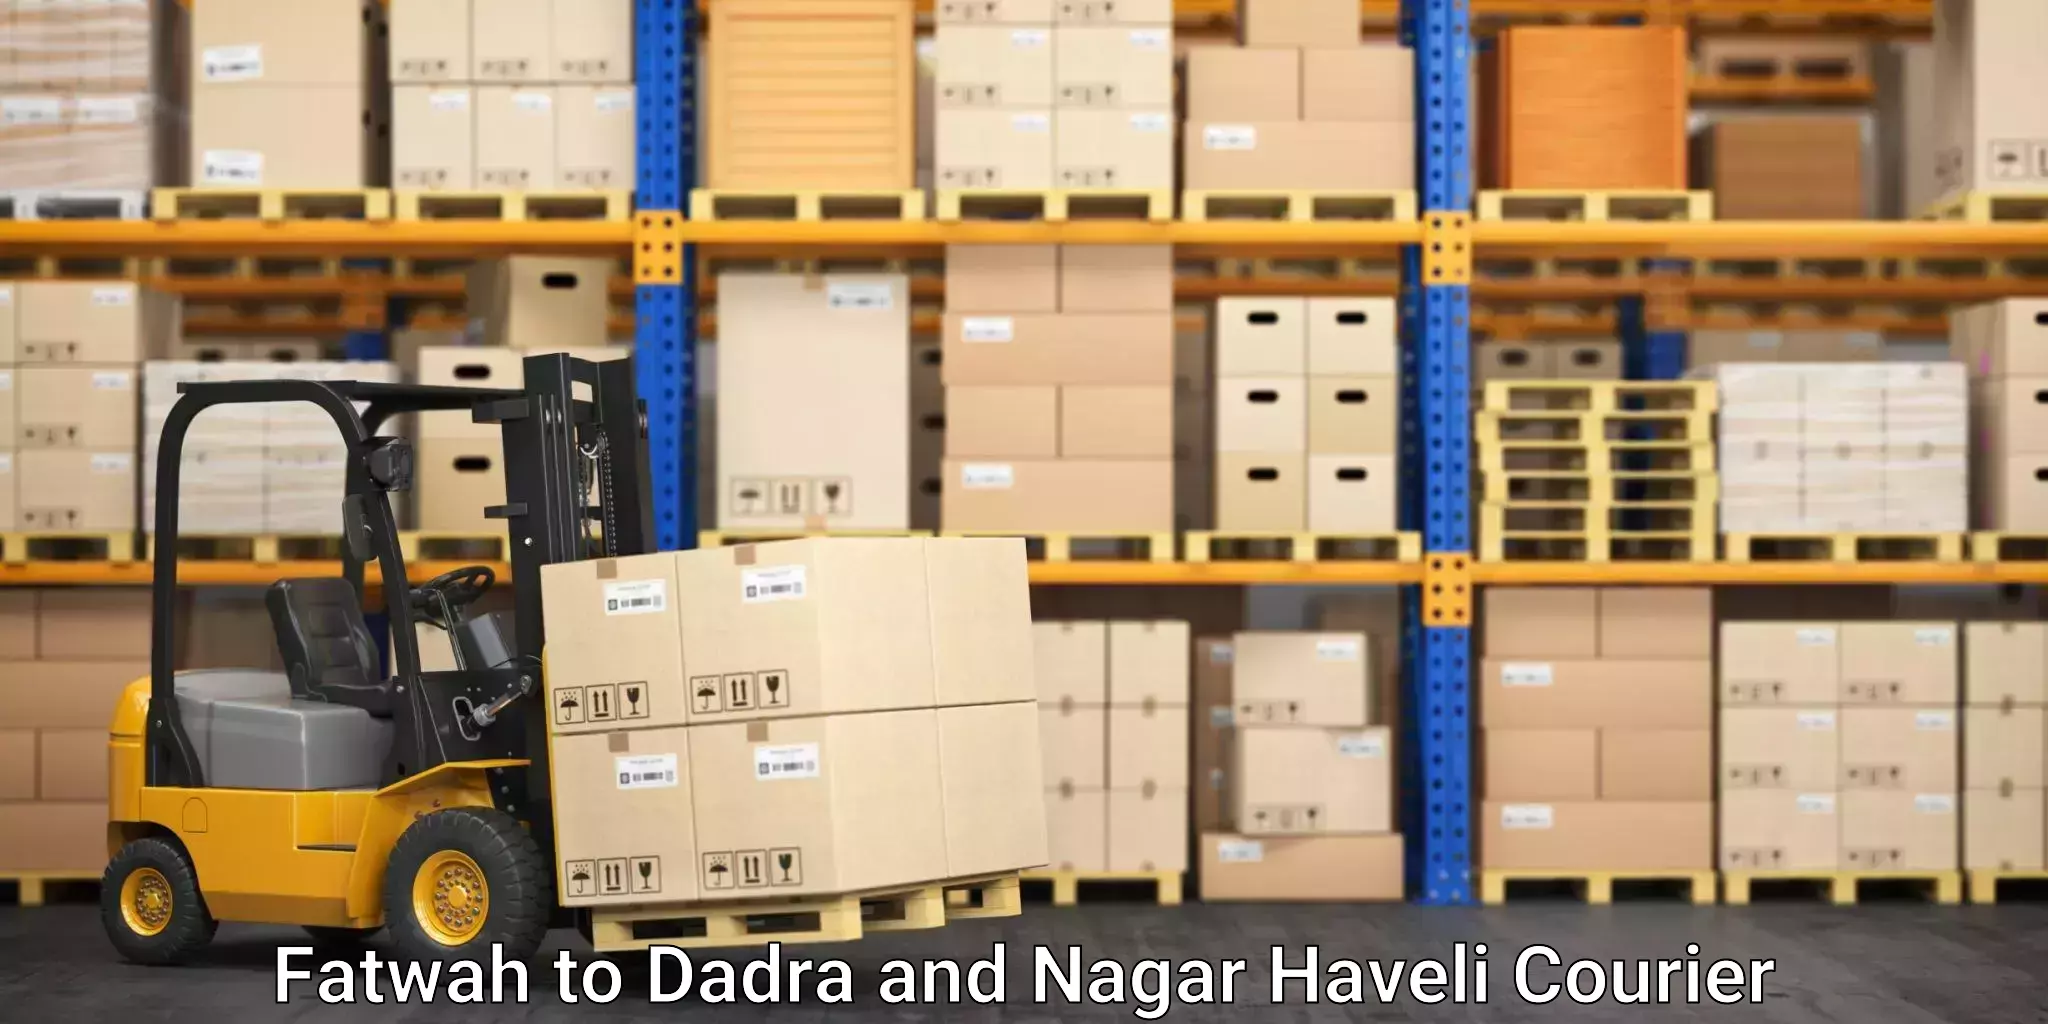 Furniture moving plans Fatwah to Dadra and Nagar Haveli